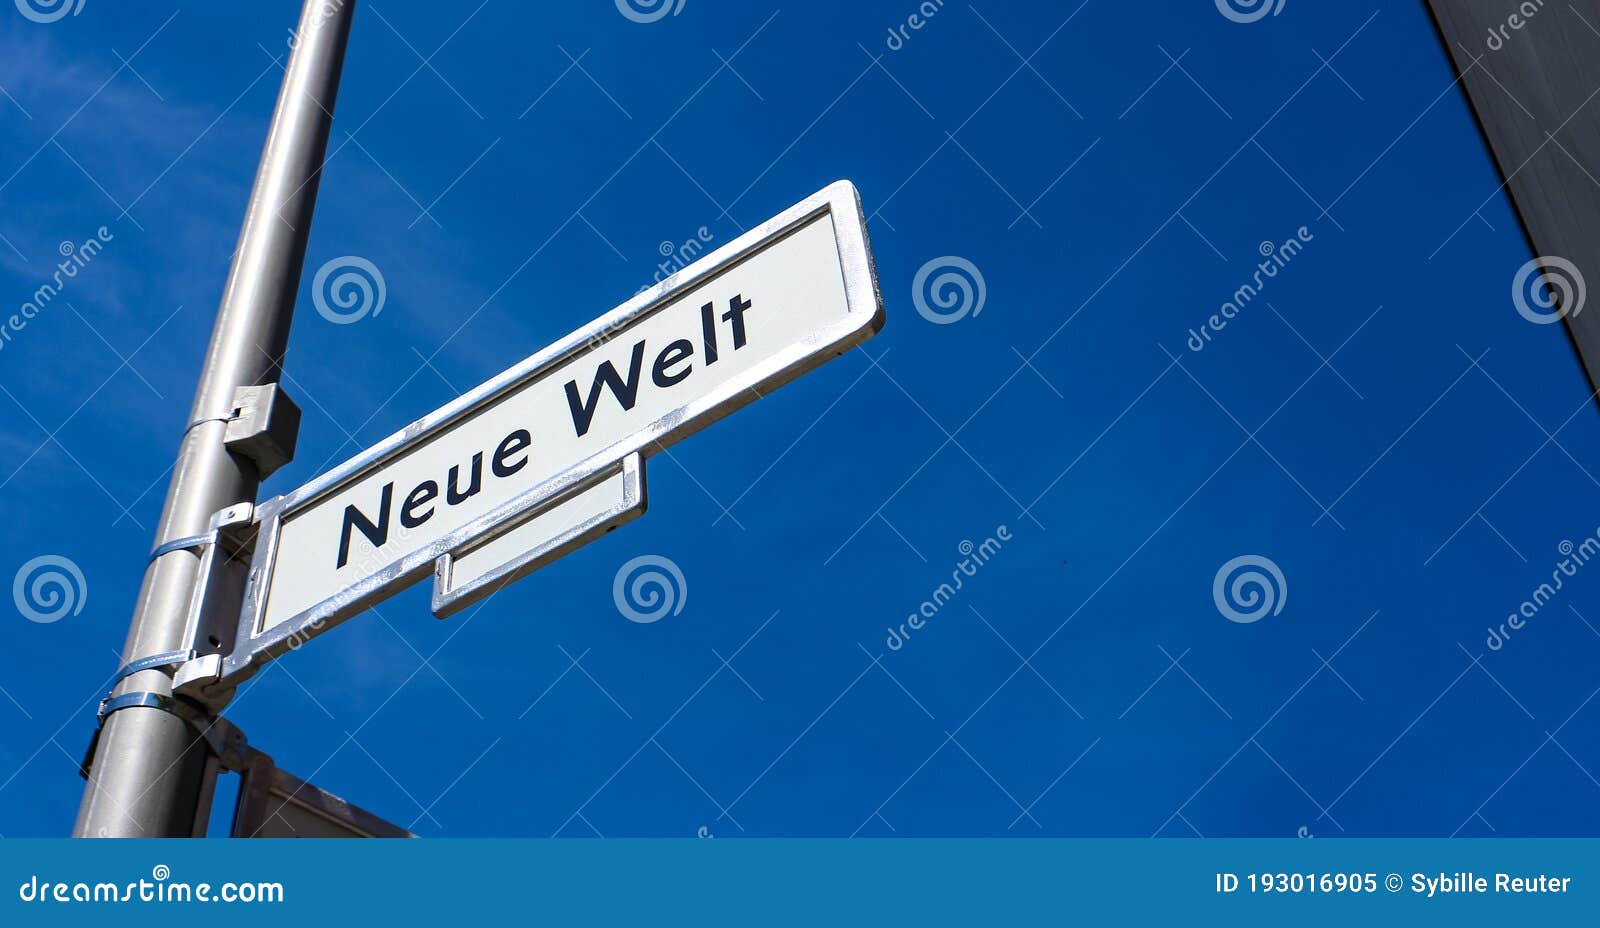 neue welt - new world - street sign in berlin, germany